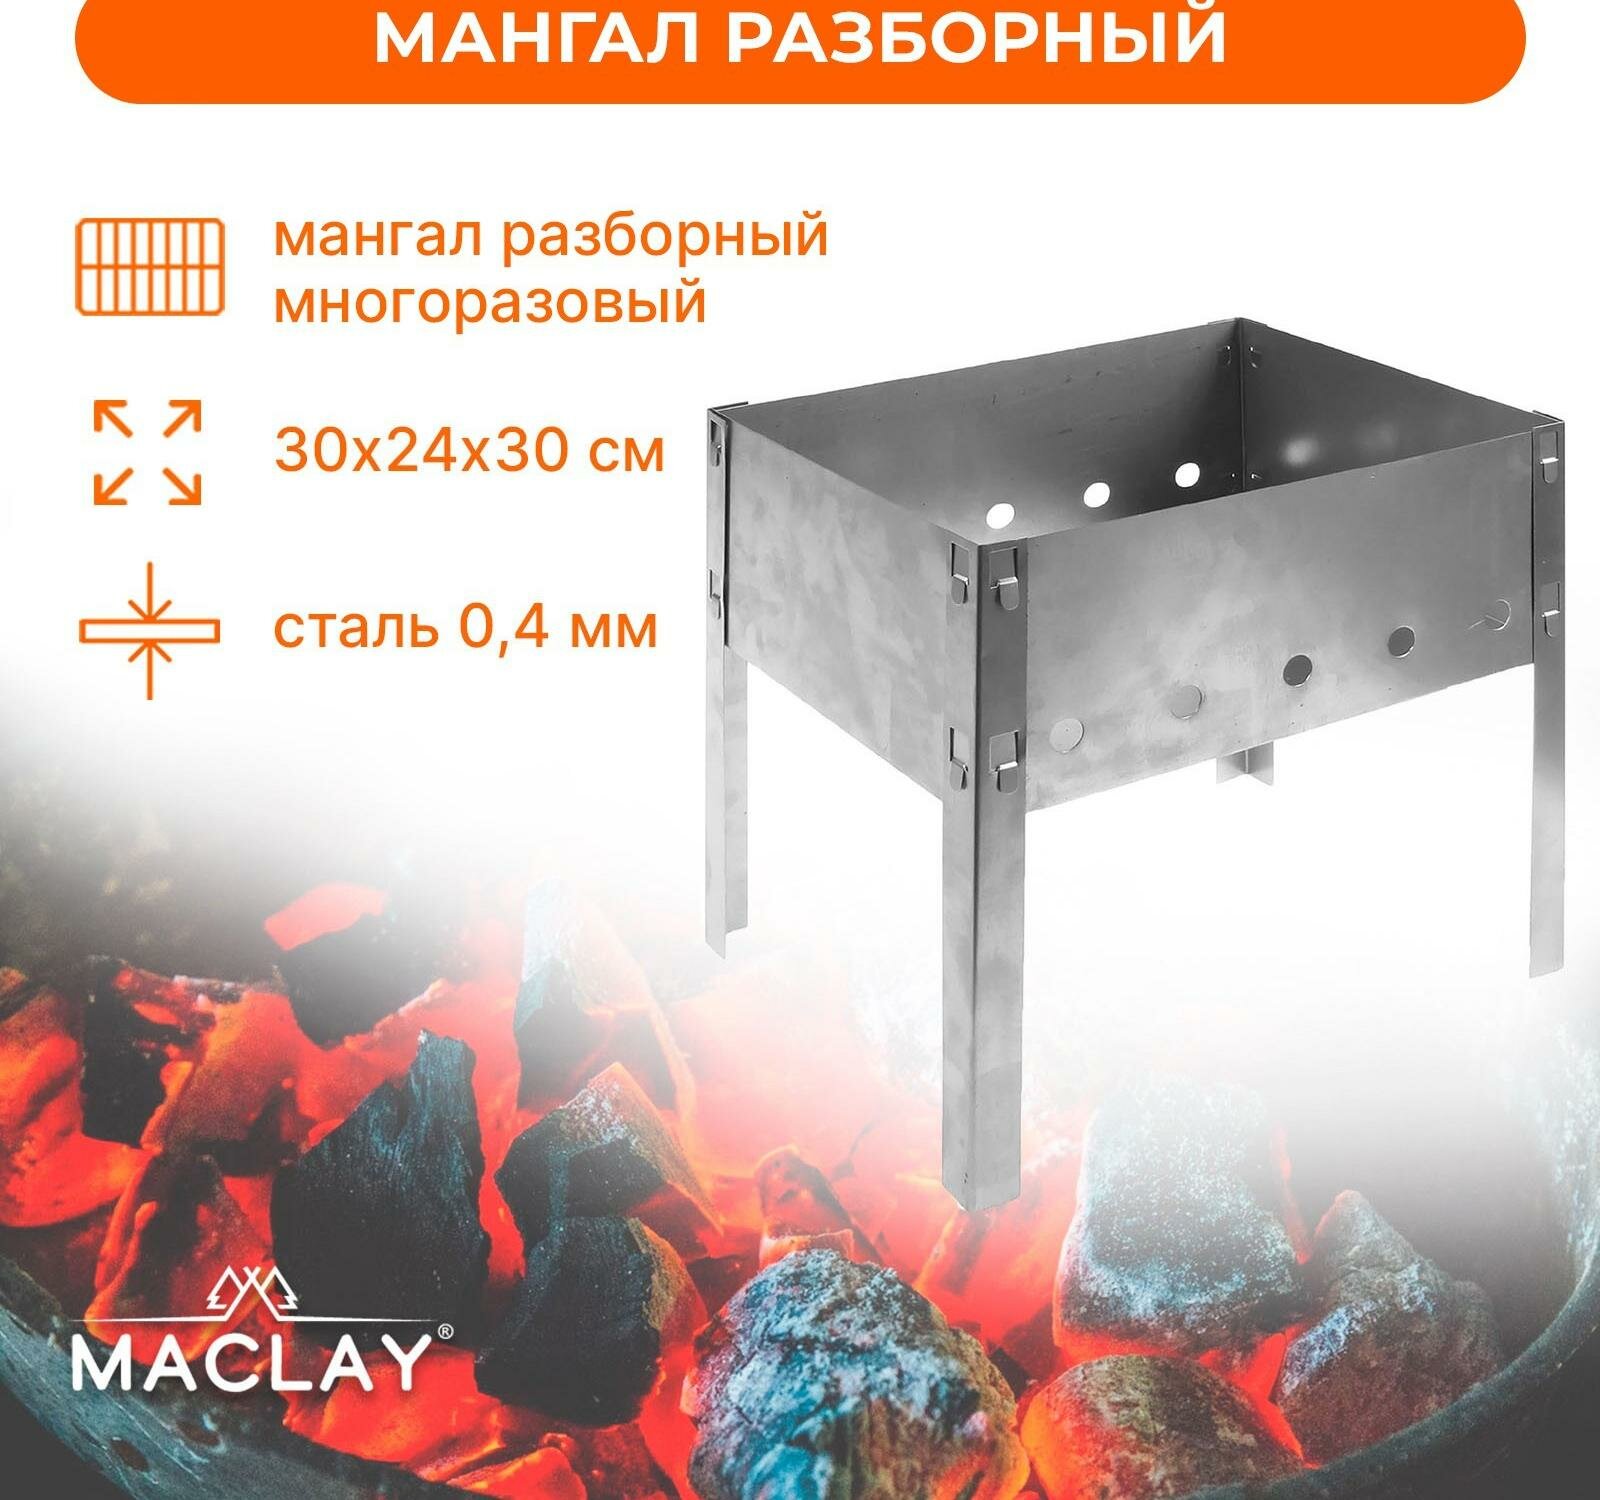 Мангал Maclay "Мини", без шампуров, 30х24х30 см